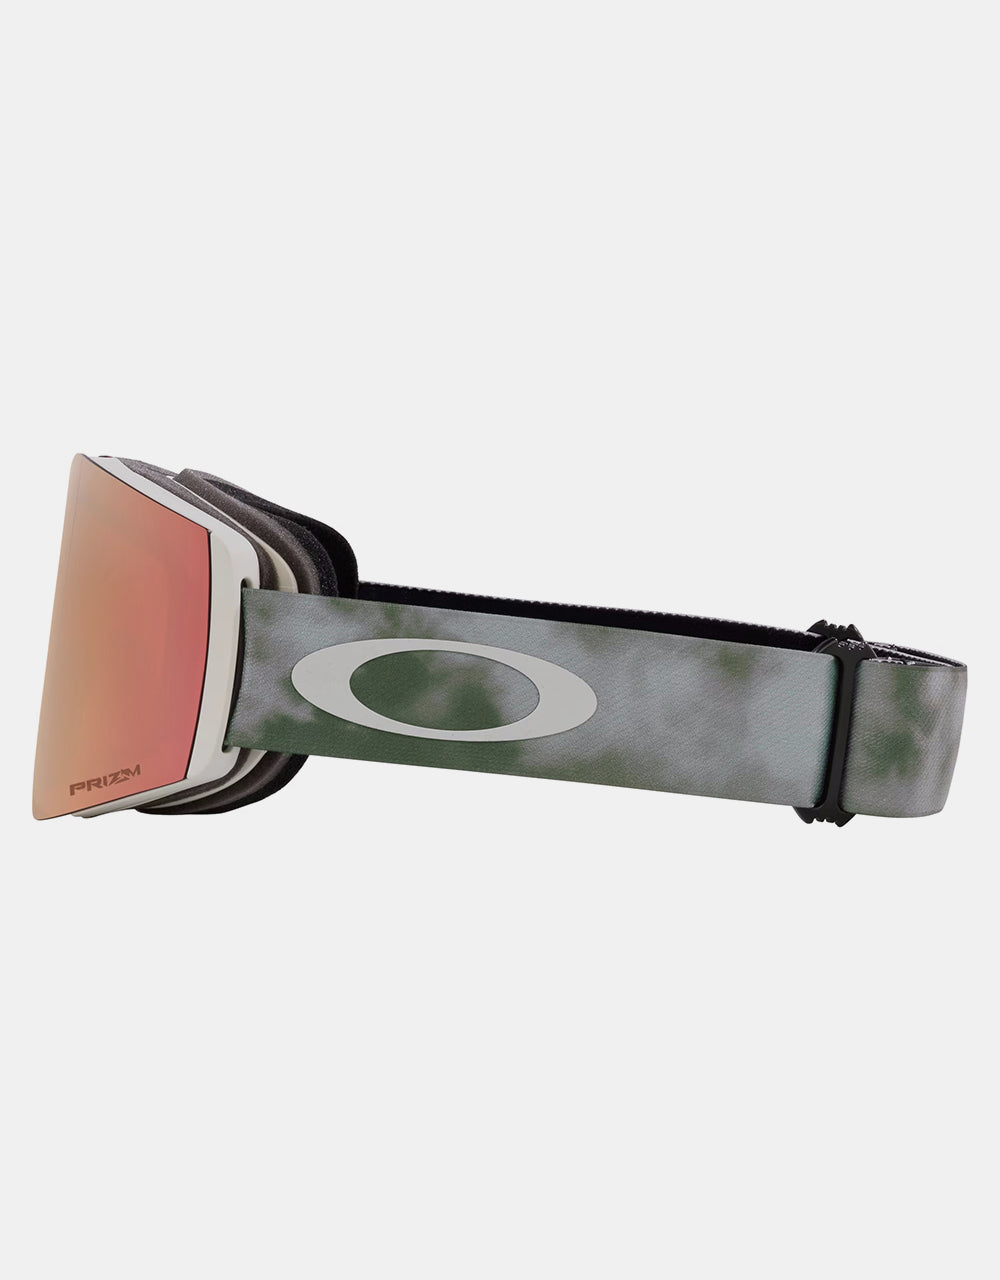 Oakley Fall Line M Snowboard Goggles - Jade Fog/Prizm Rose Gold Iridium